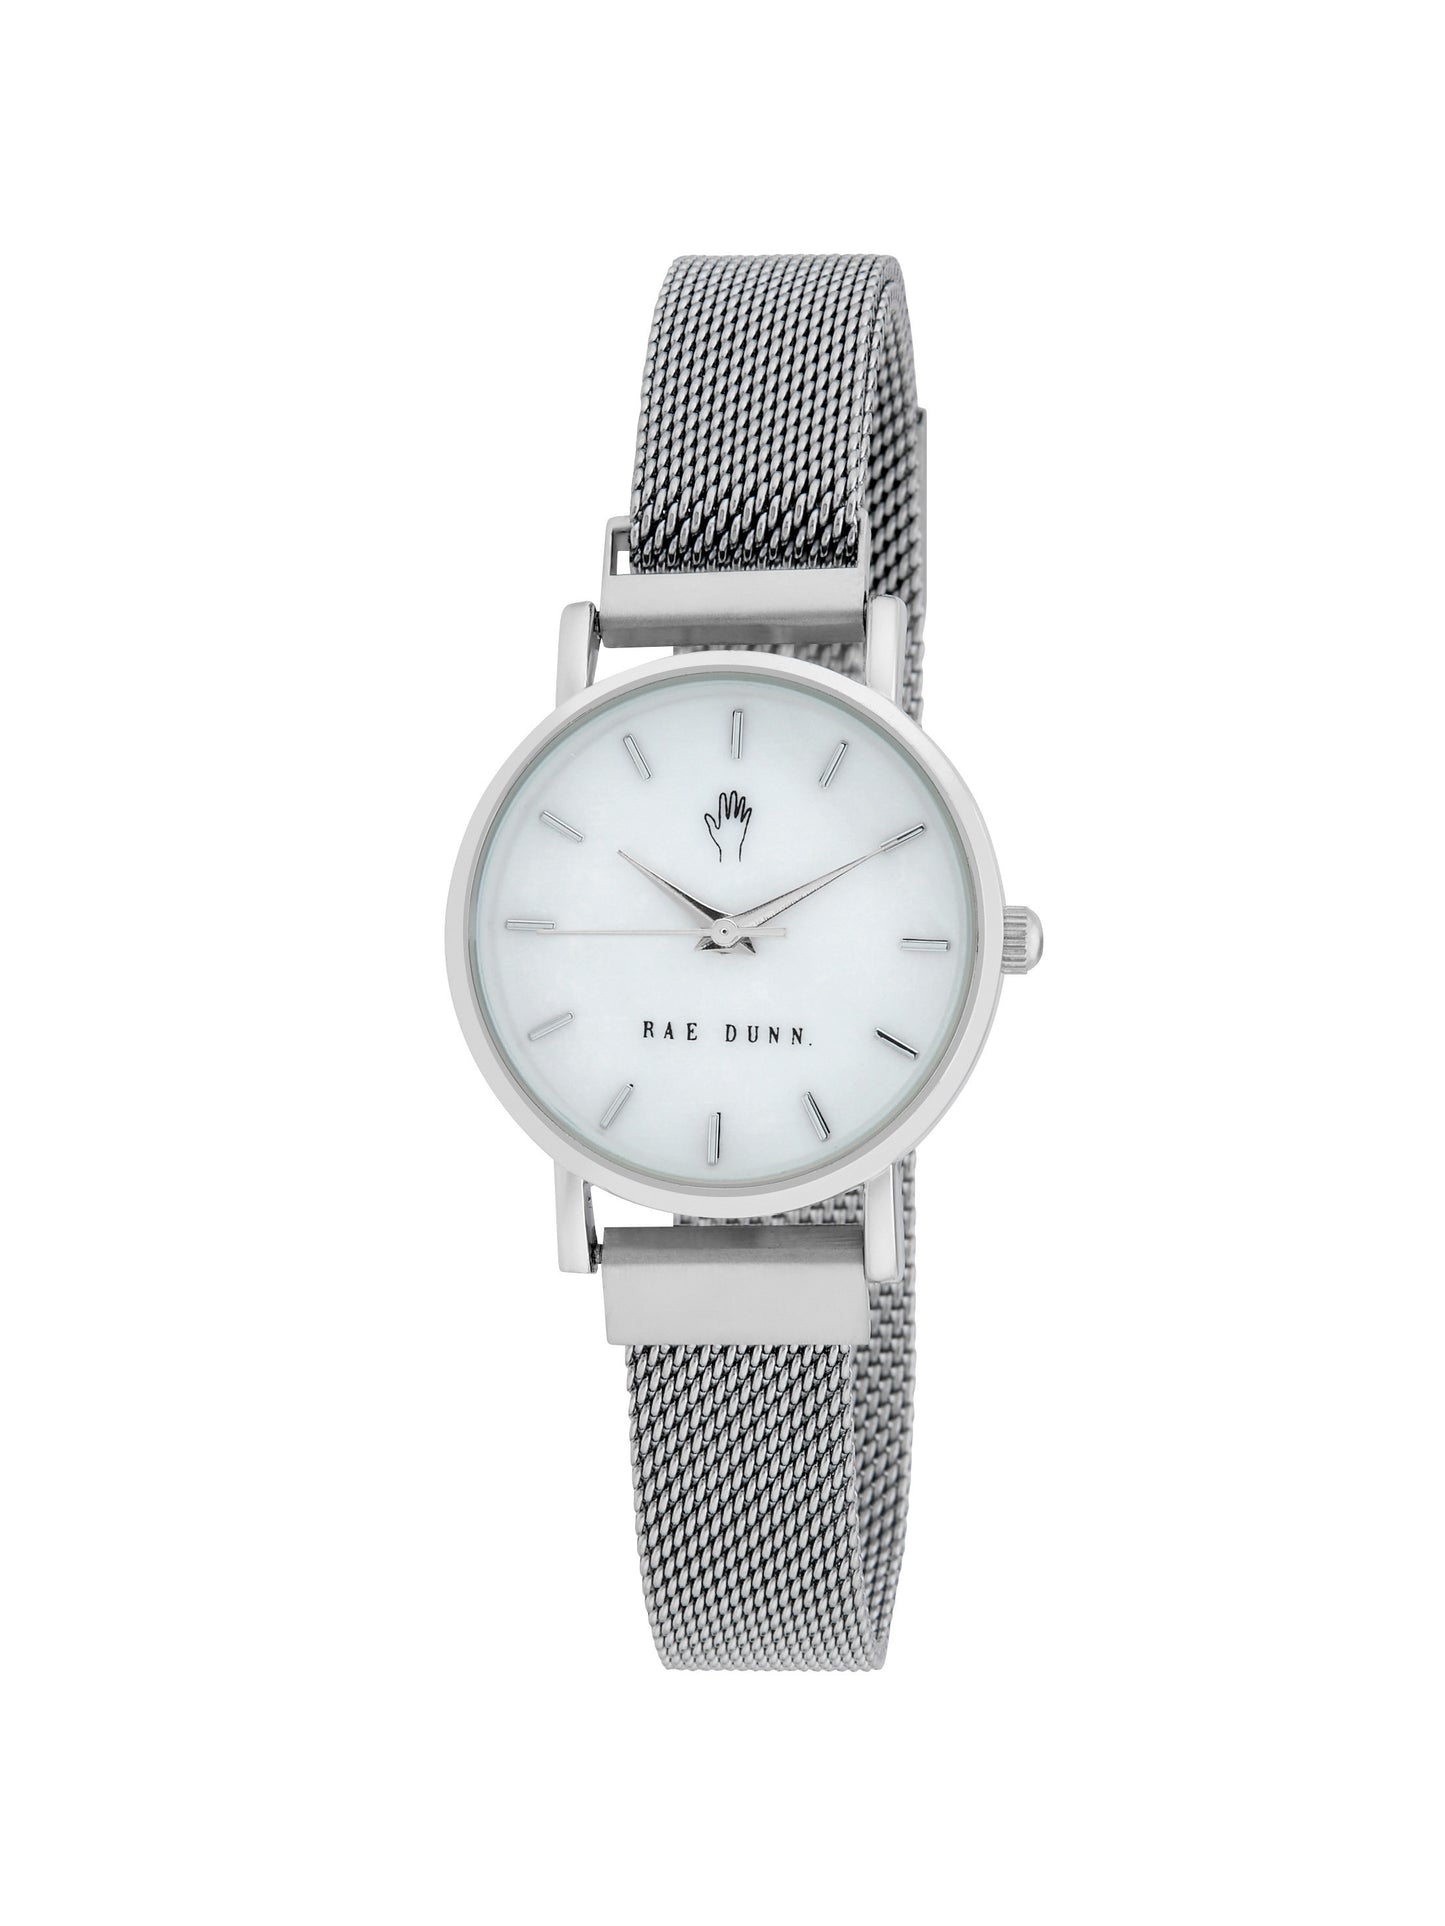 TARA Small Round Face Mesh Bracelet Watch in Silver, 29mm - Rae Dunn Wear - Watch